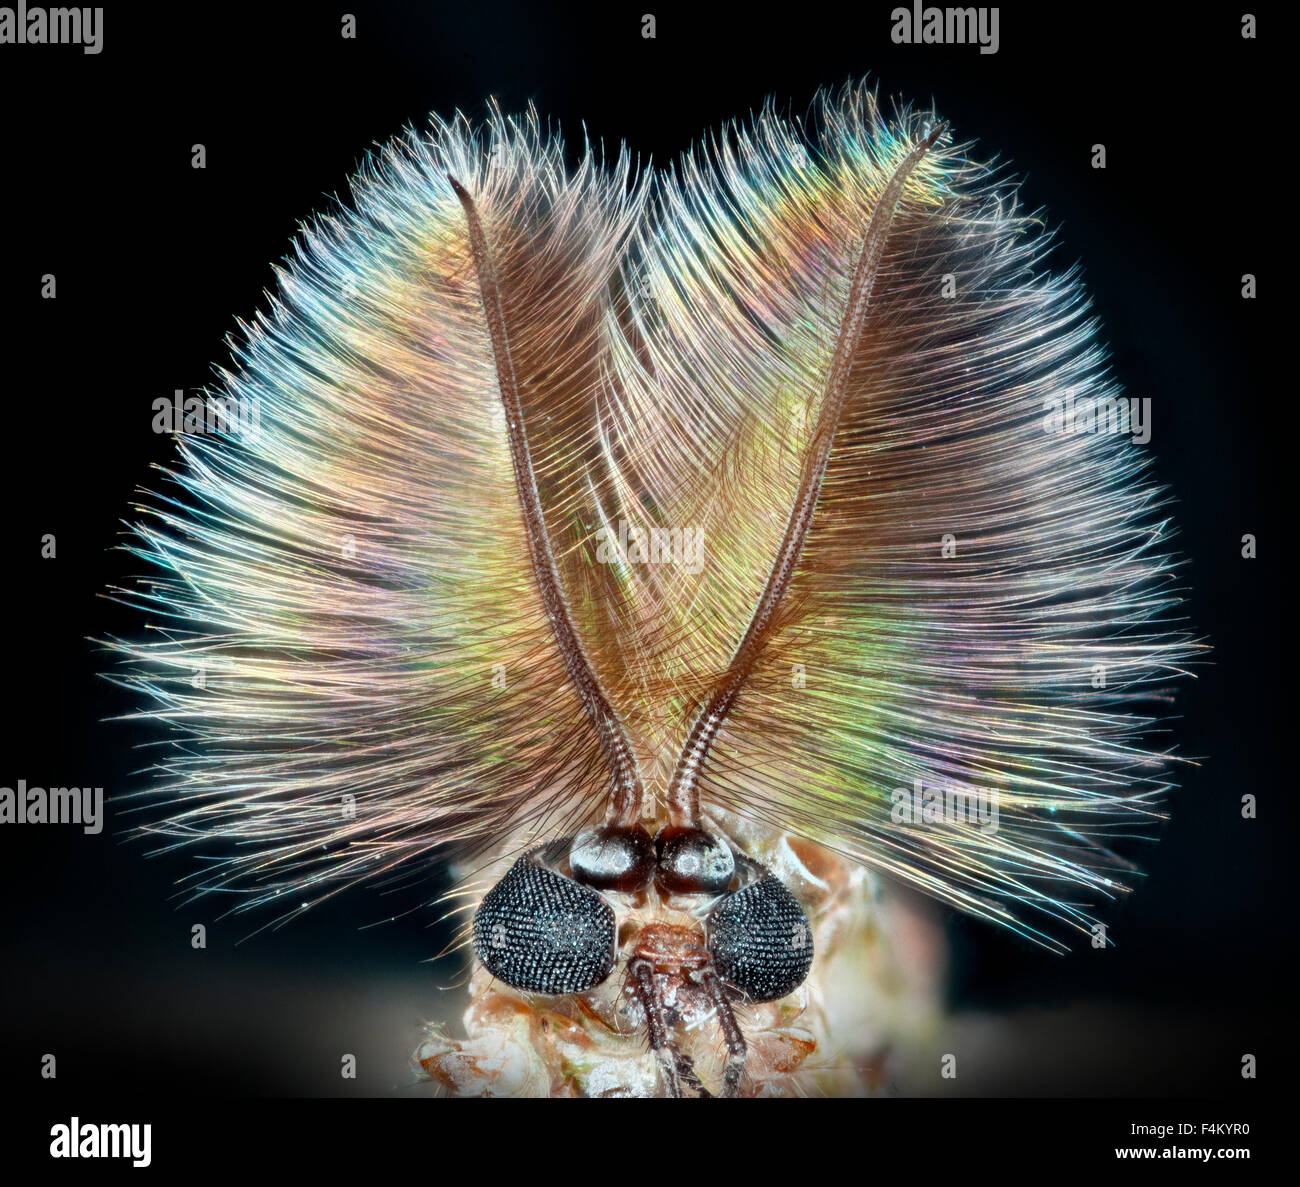 Midge face, compound eyes and  feathery (plumose) antennae high macro view, black background Stock Photo